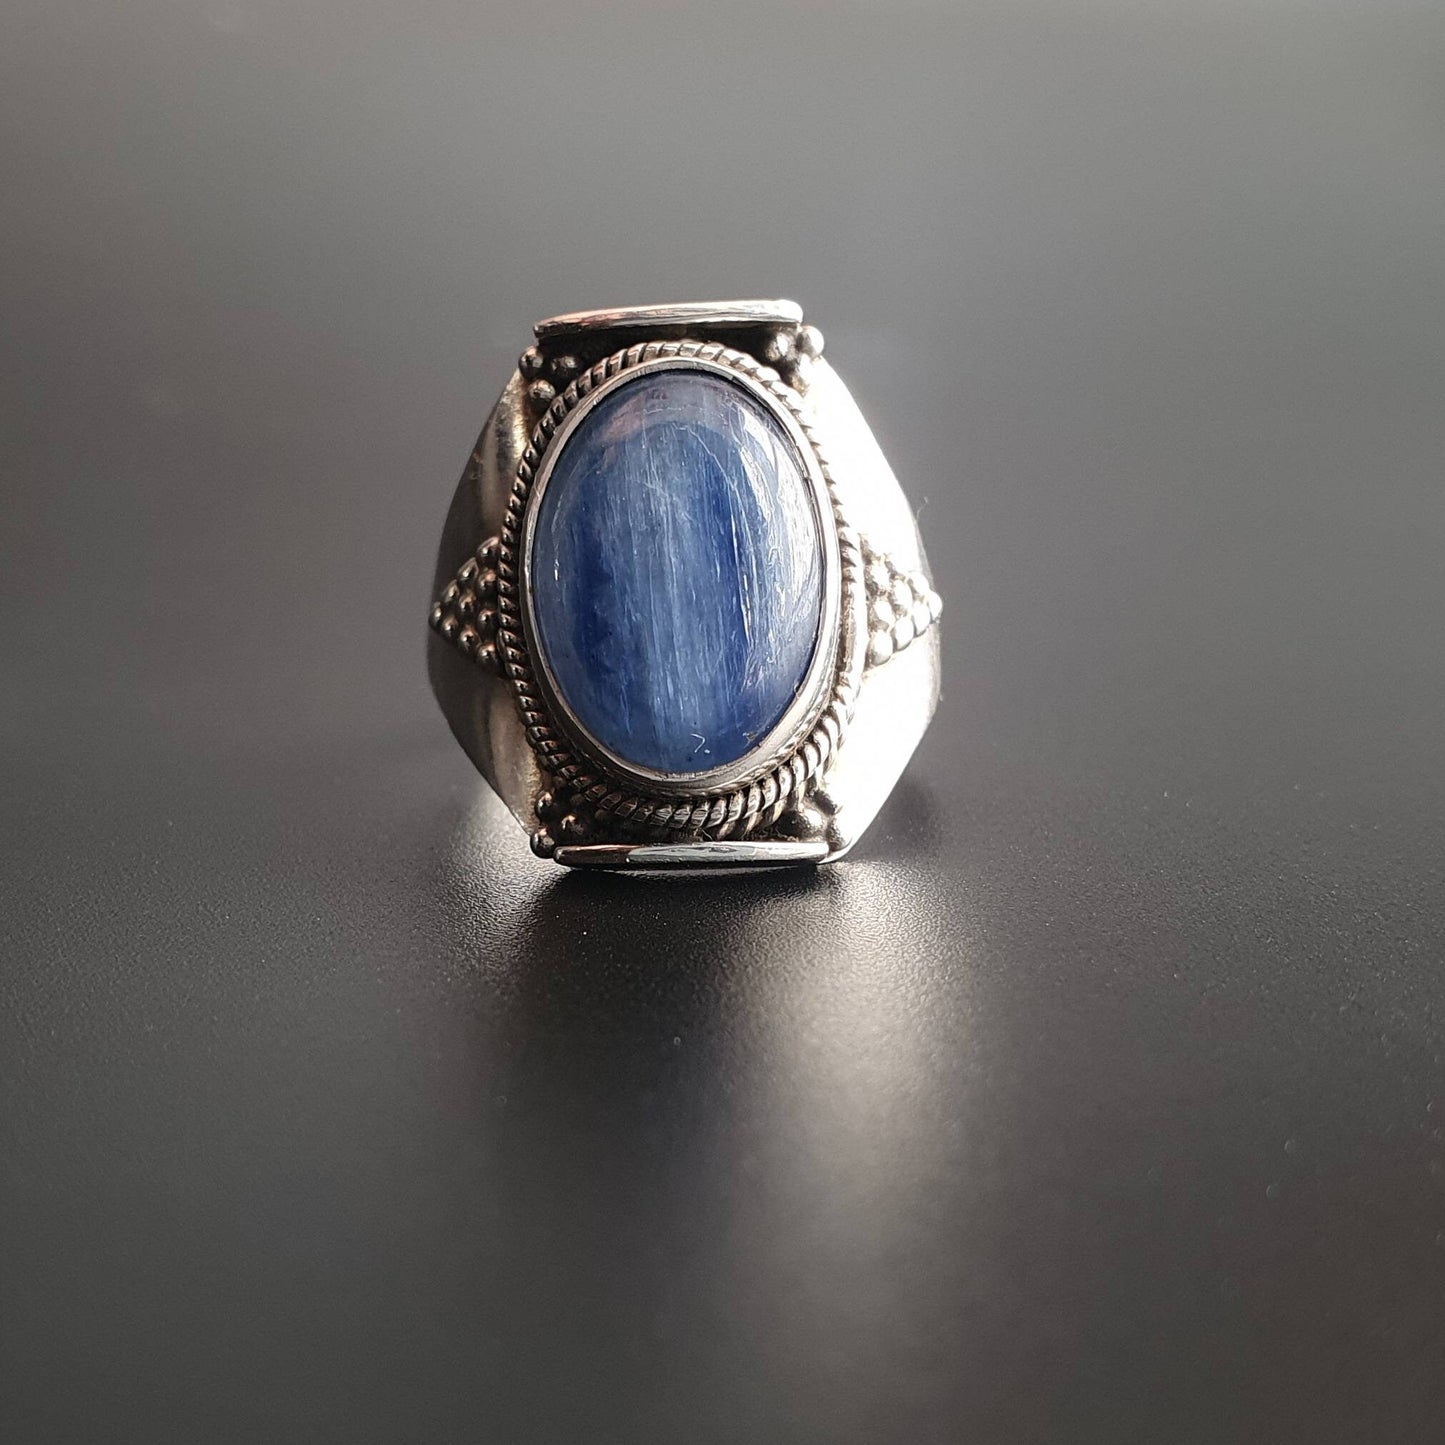 Vintage,saddle ring, sterling silver, ring, statement ring, chunky ring,blue gemstone, Boho jewelry, gifts handmade, ethnic, tribal, kyanite